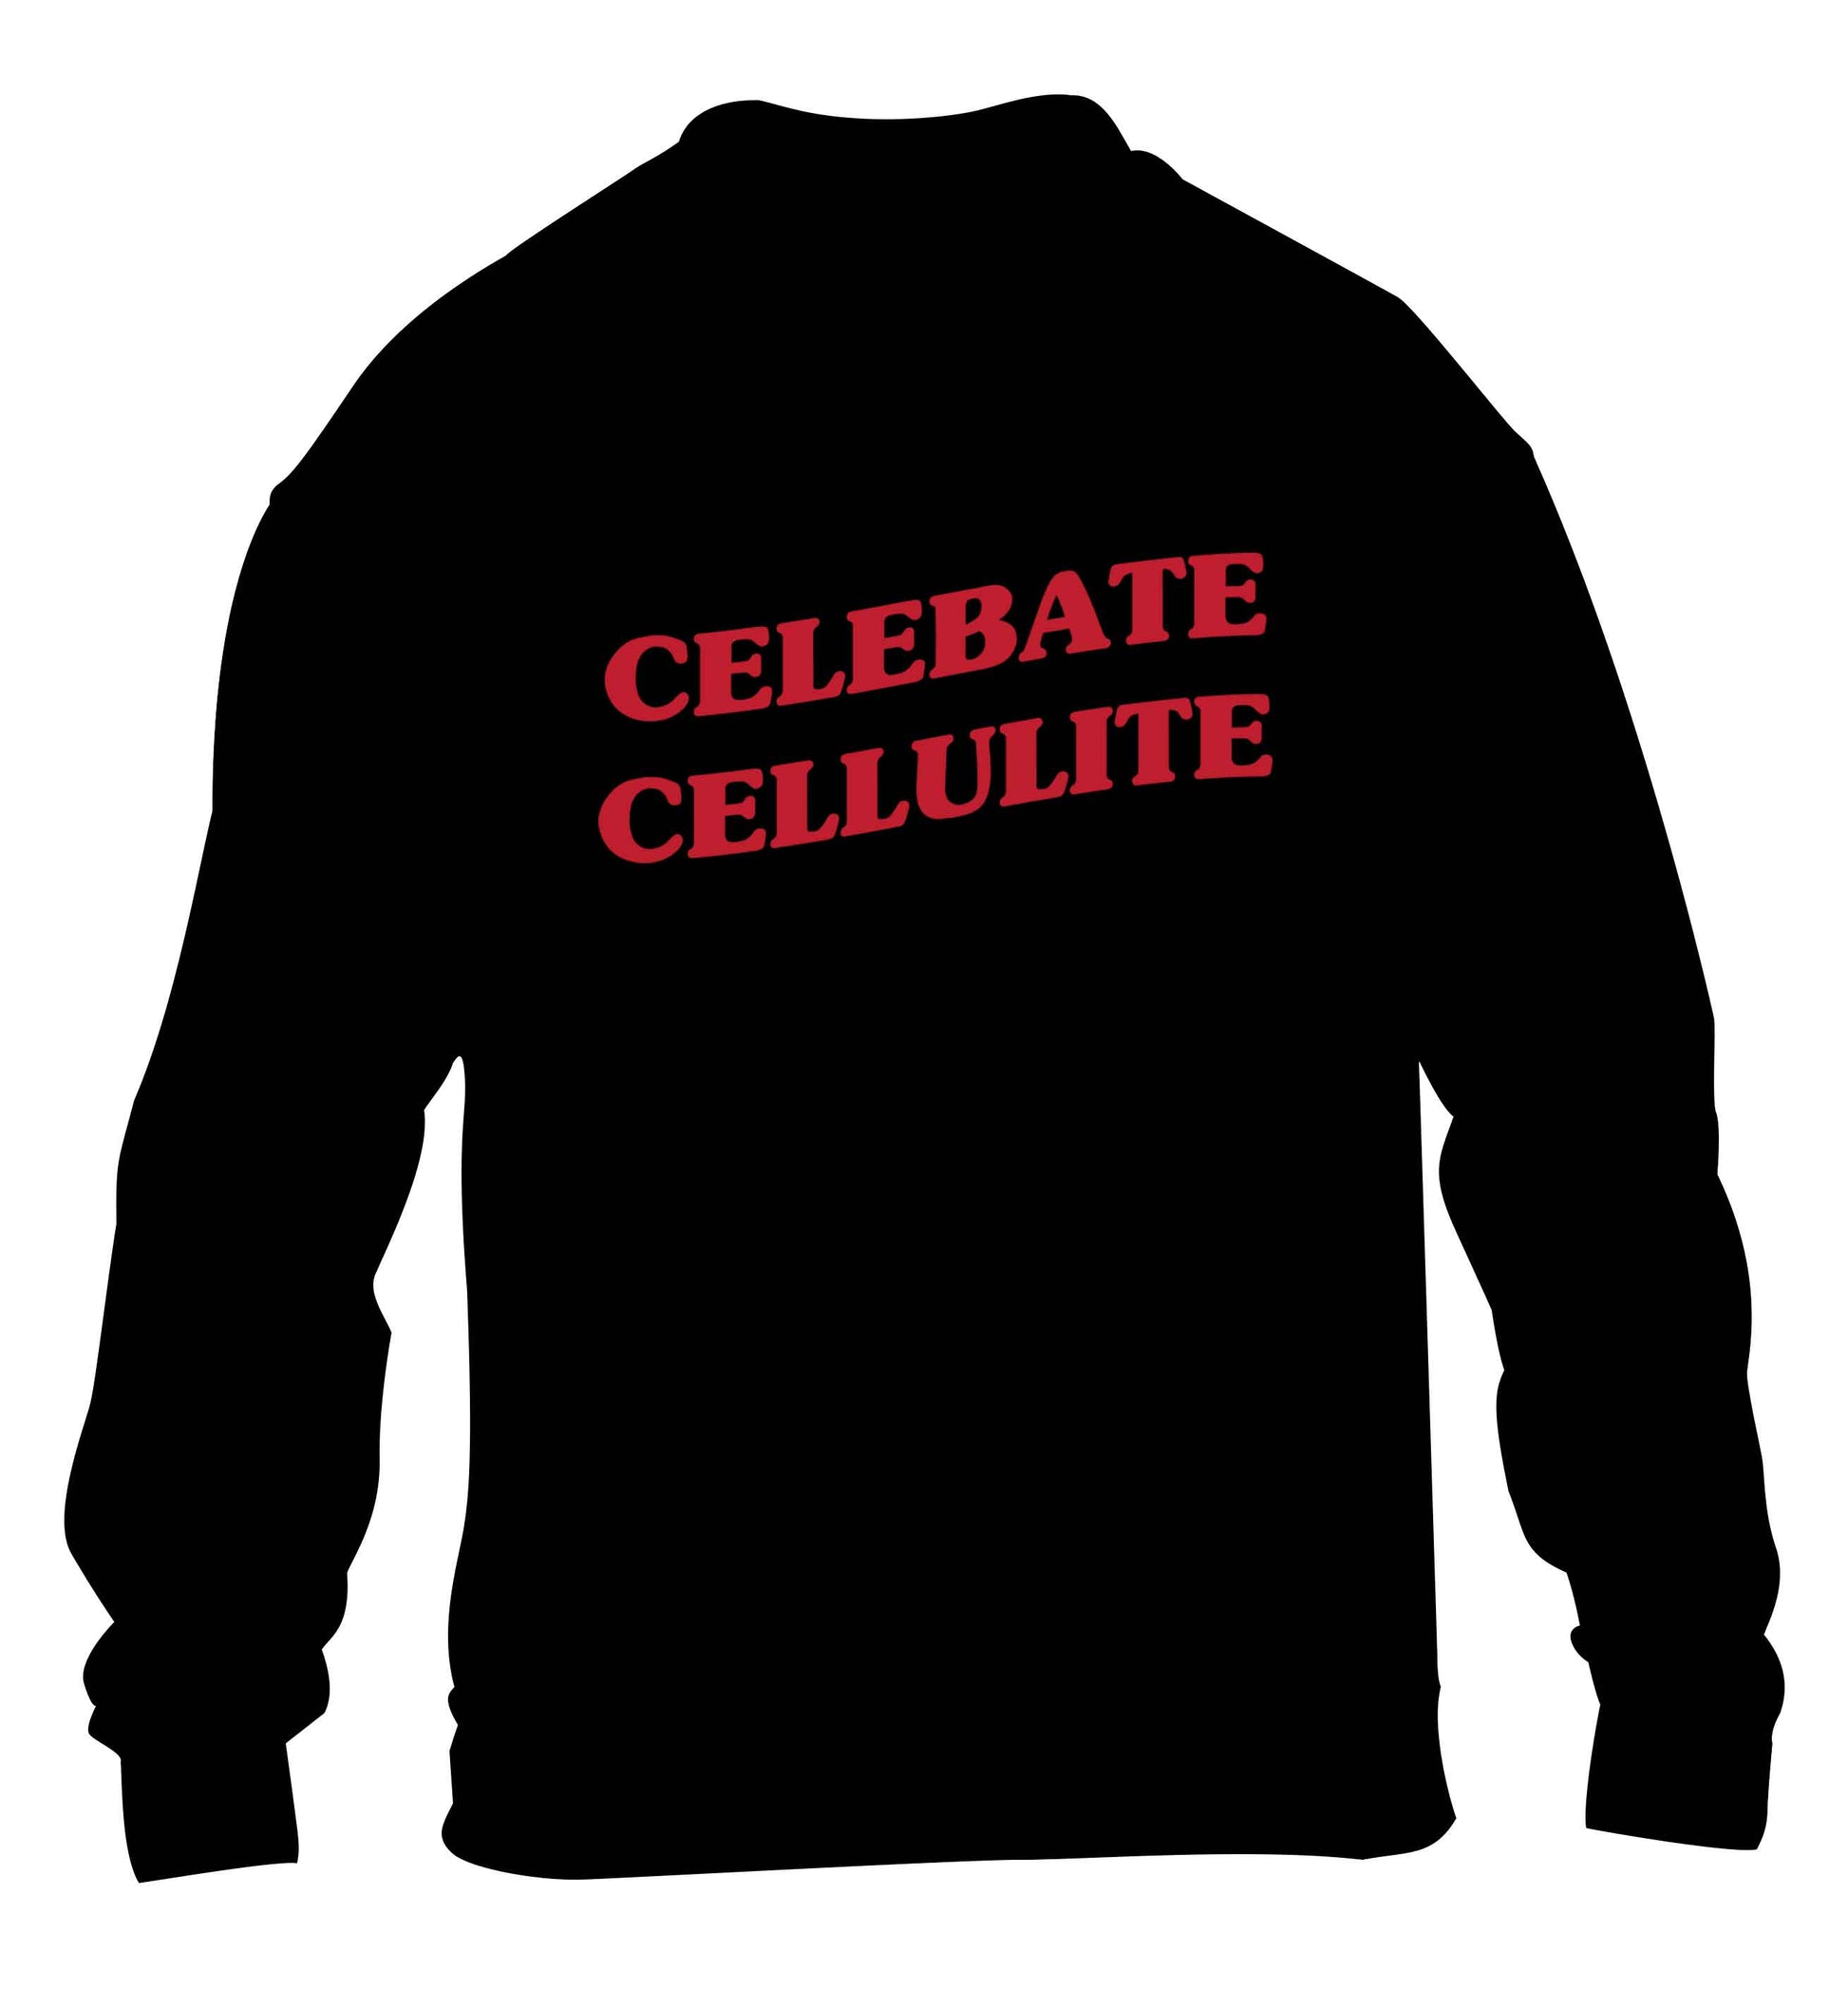 Celebrate cellulite children's black sweater 12-13 Years